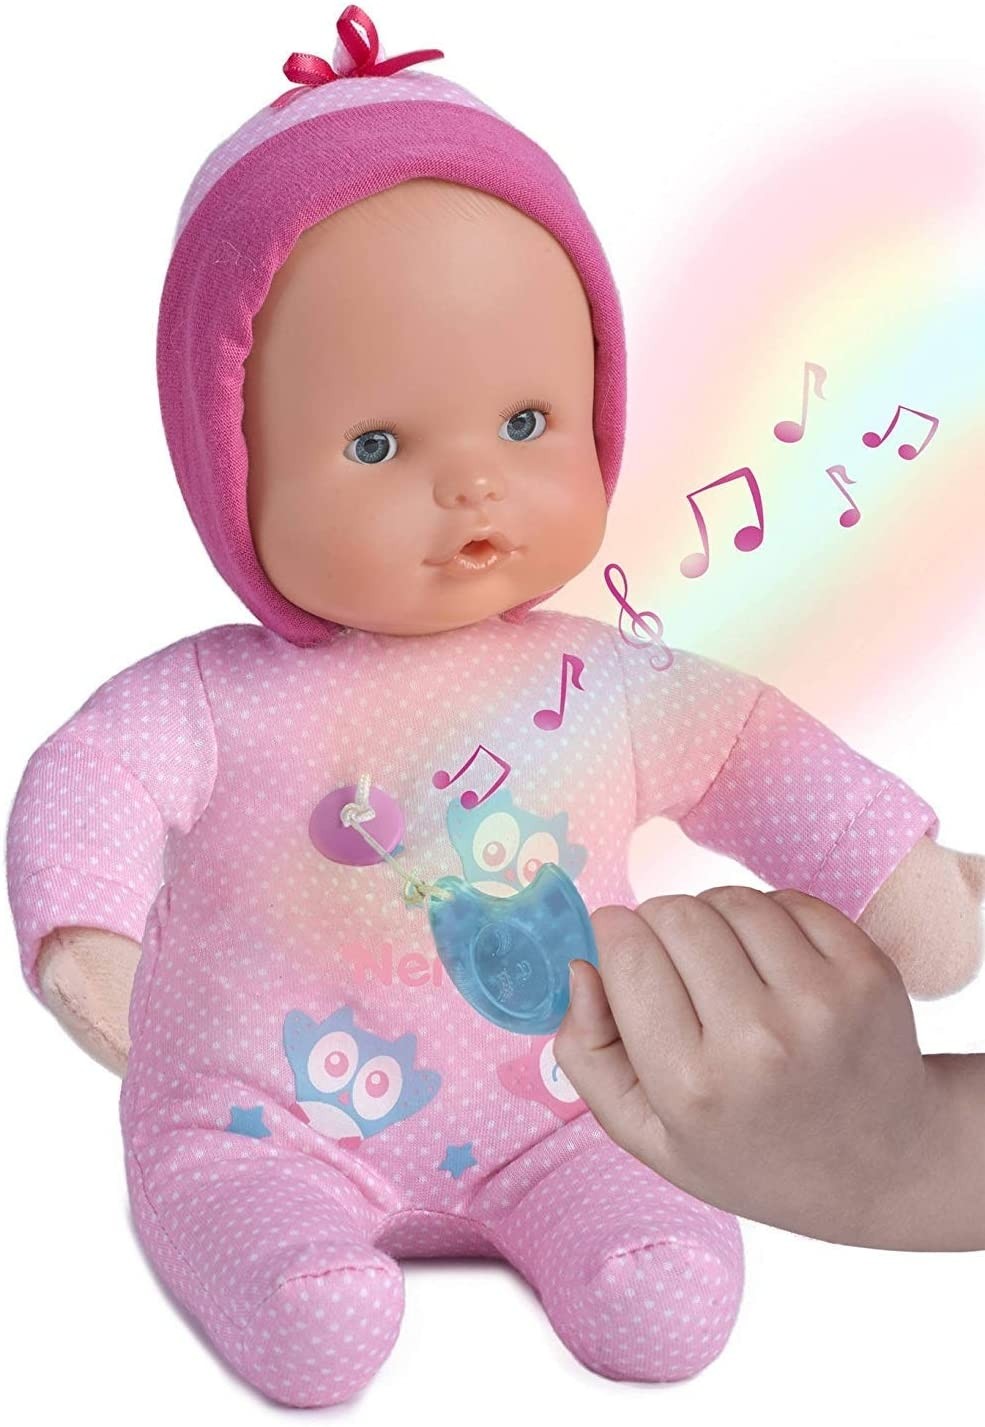 Nenuco bambola musicale 25 cm